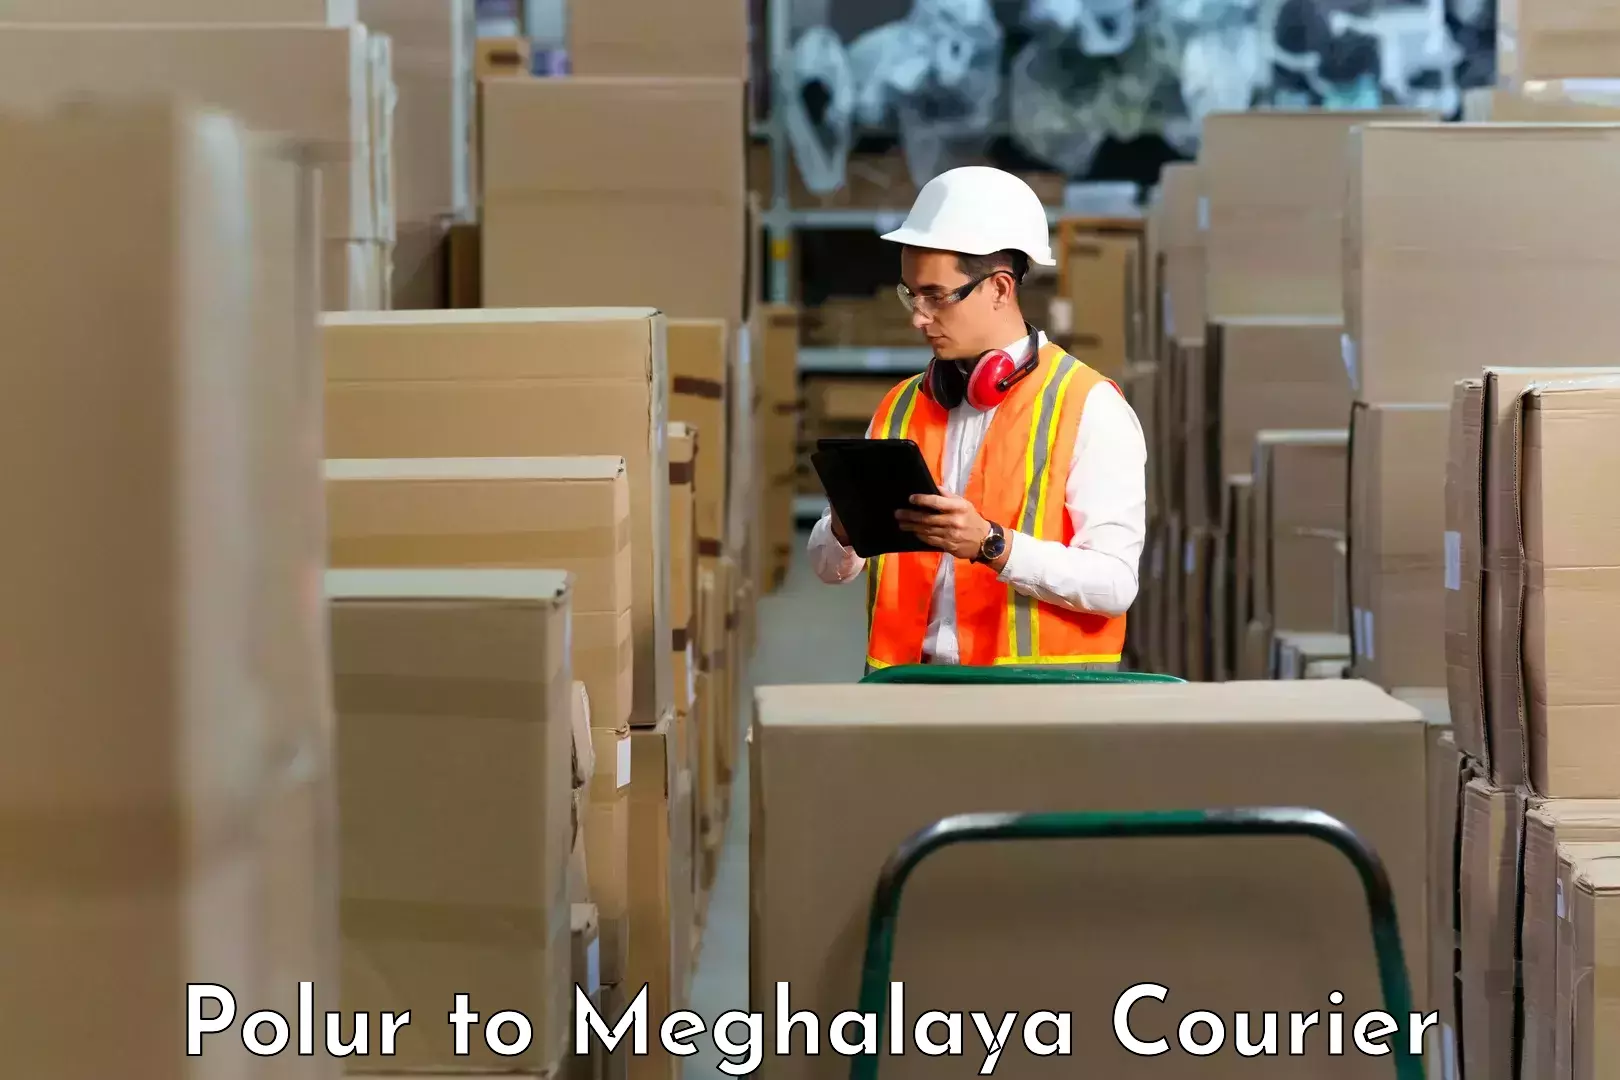 High-speed parcel service Polur to Meghalaya